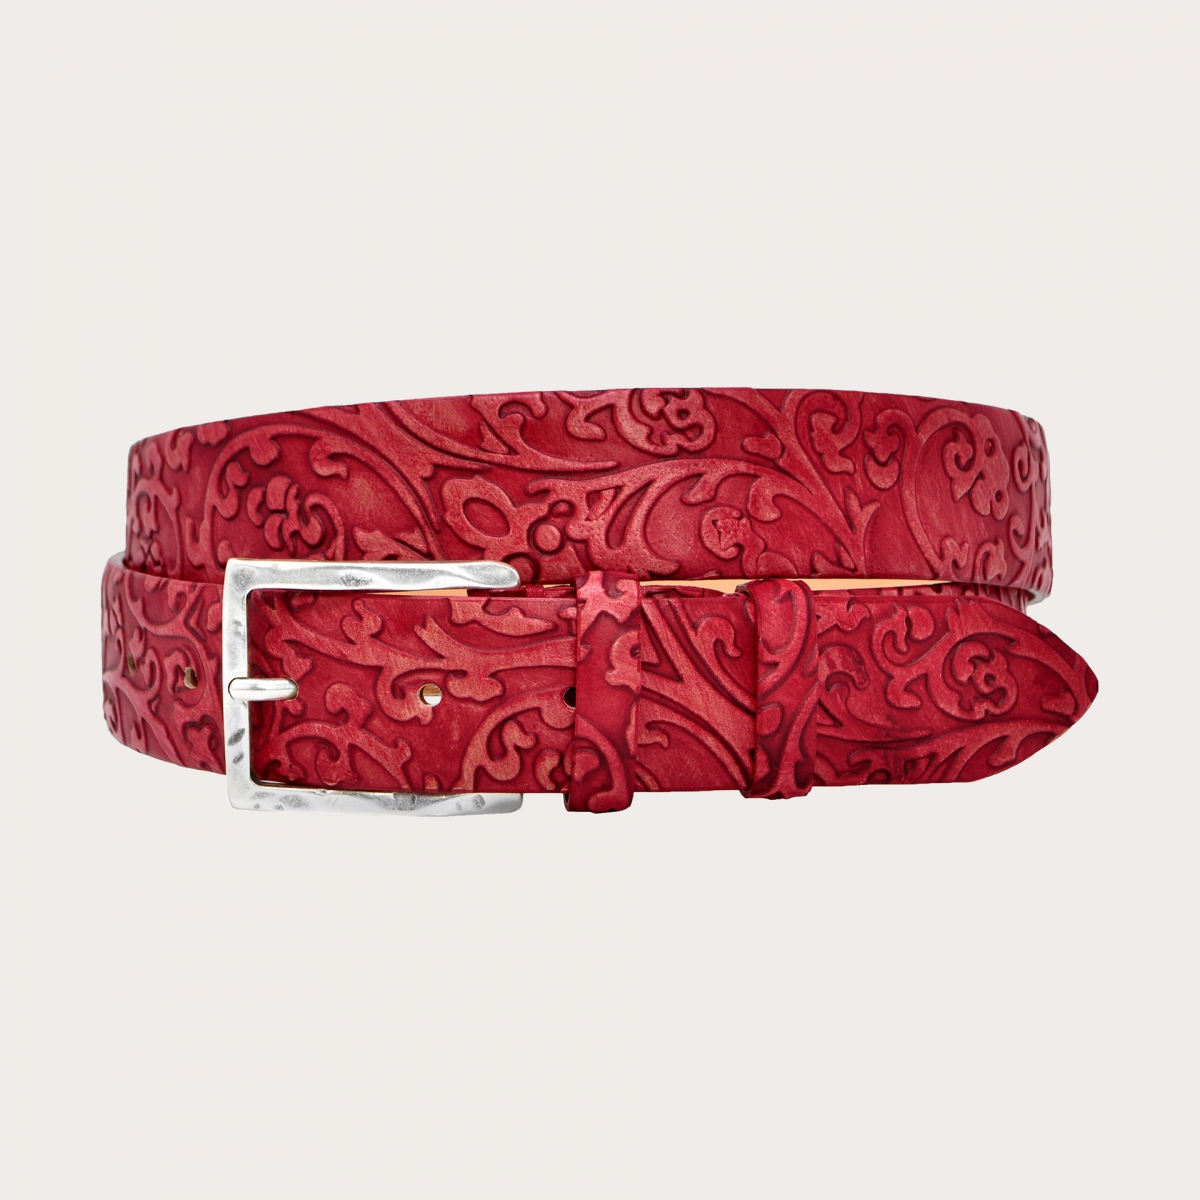 BRUCLE Roter Gürtel aus gepuffertem Leder mit geprägtem Blumenmotiv